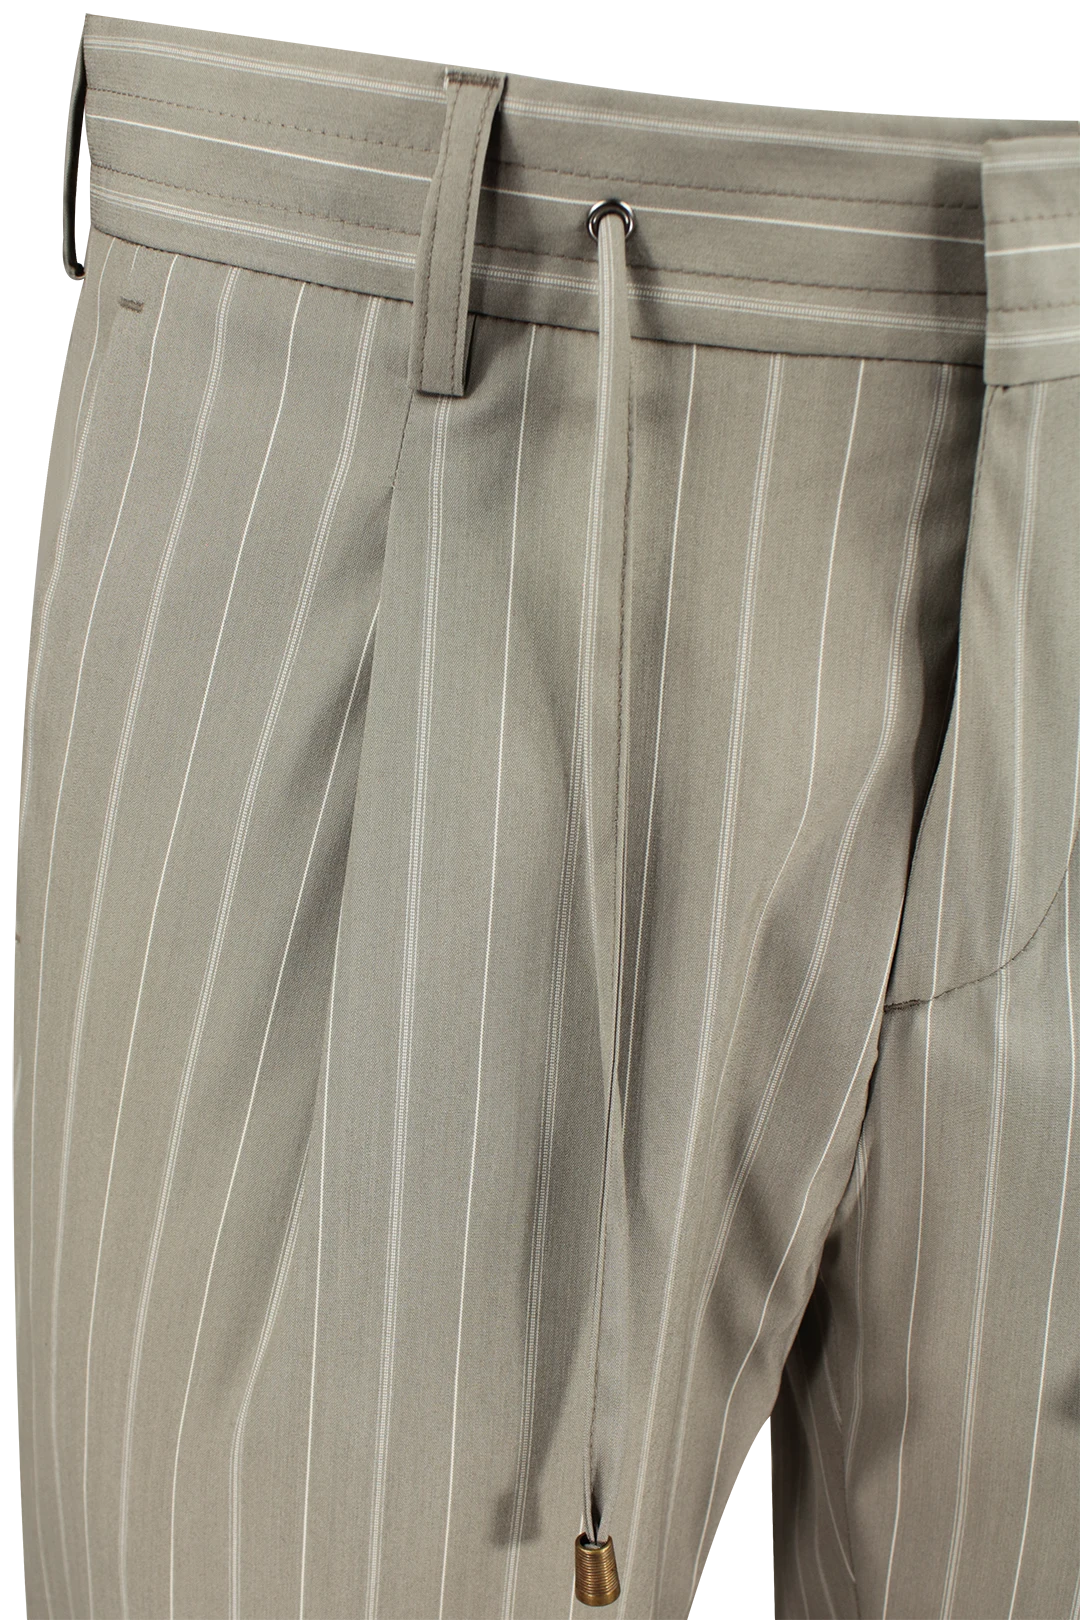 Pantalone con pince e coulisse in lana gessata grigio tortora coulisse